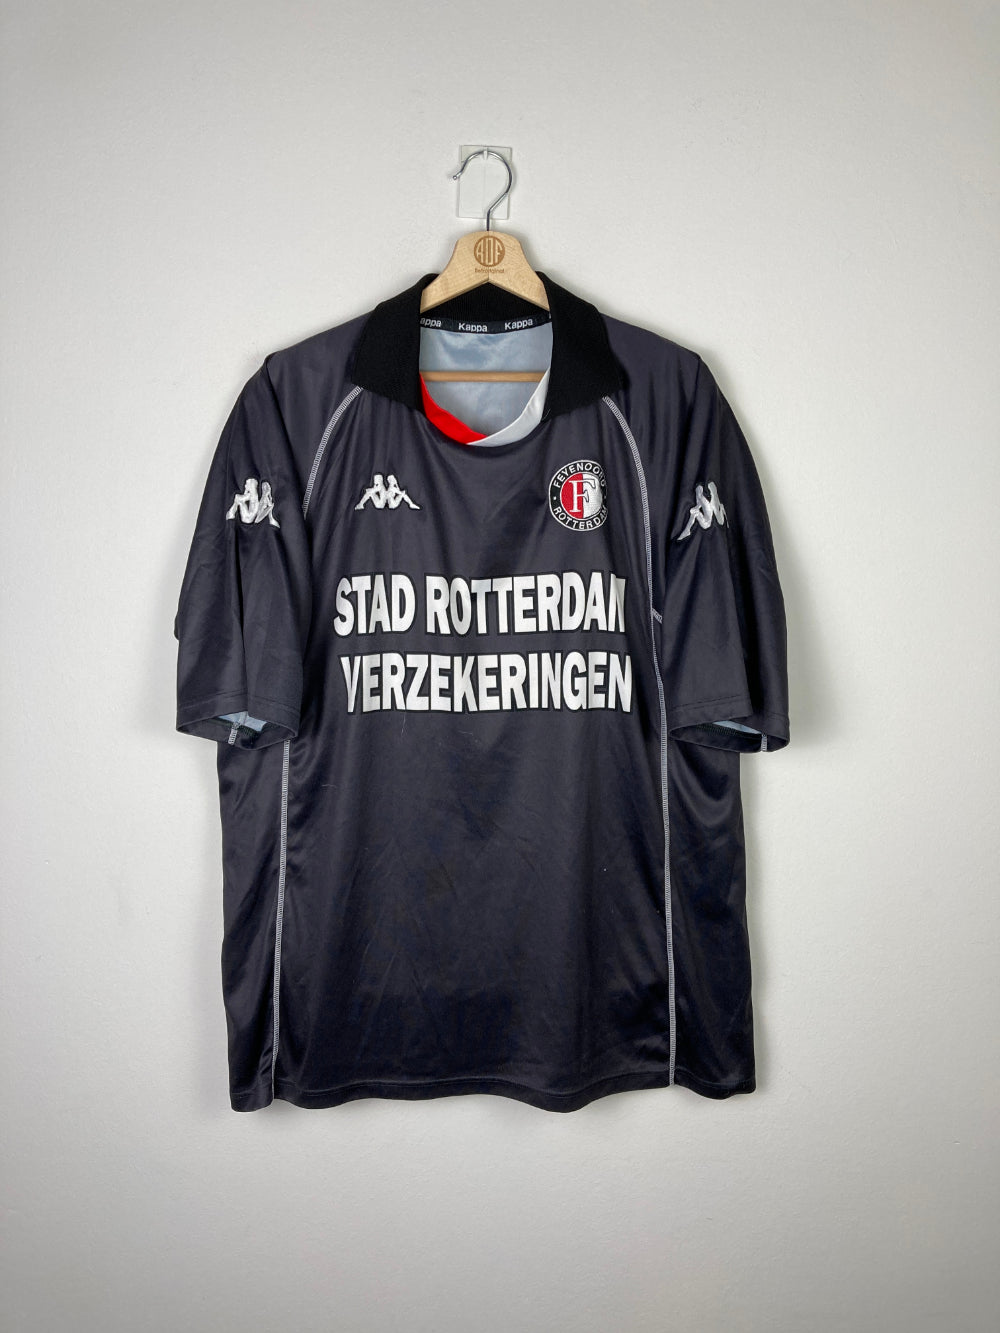 Original Feyenoord Rotterdam Away Jersey 2001-2002 #9 van Hooijdonk - XL